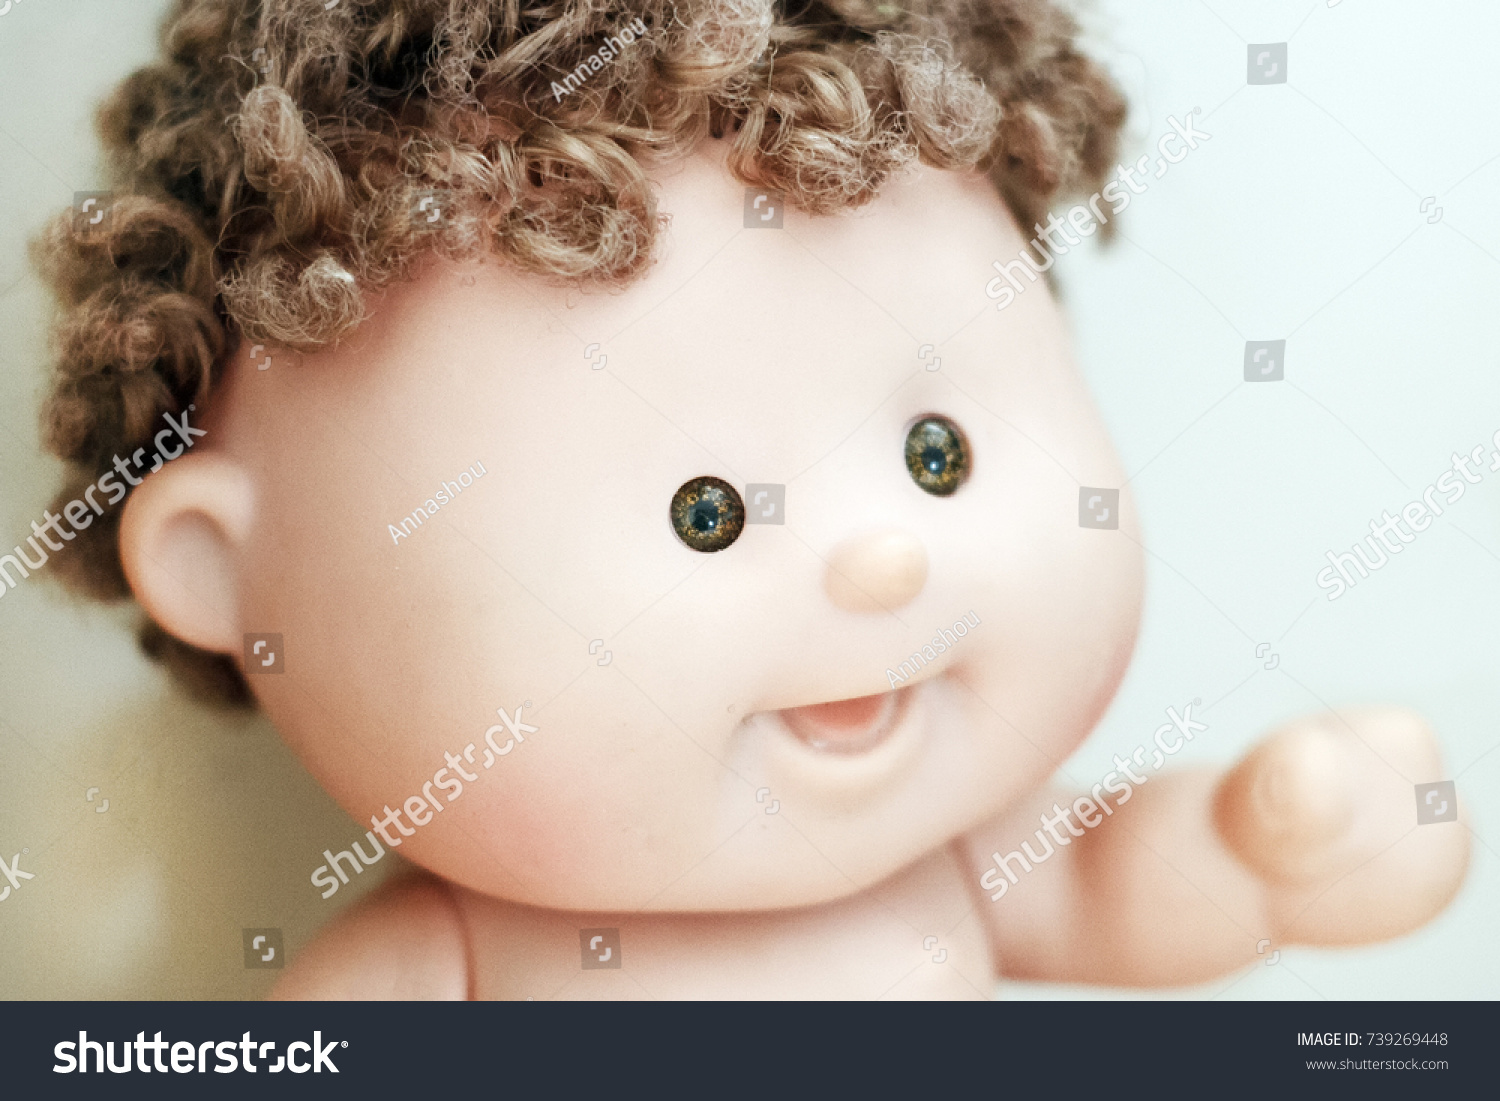 fat baby dolls